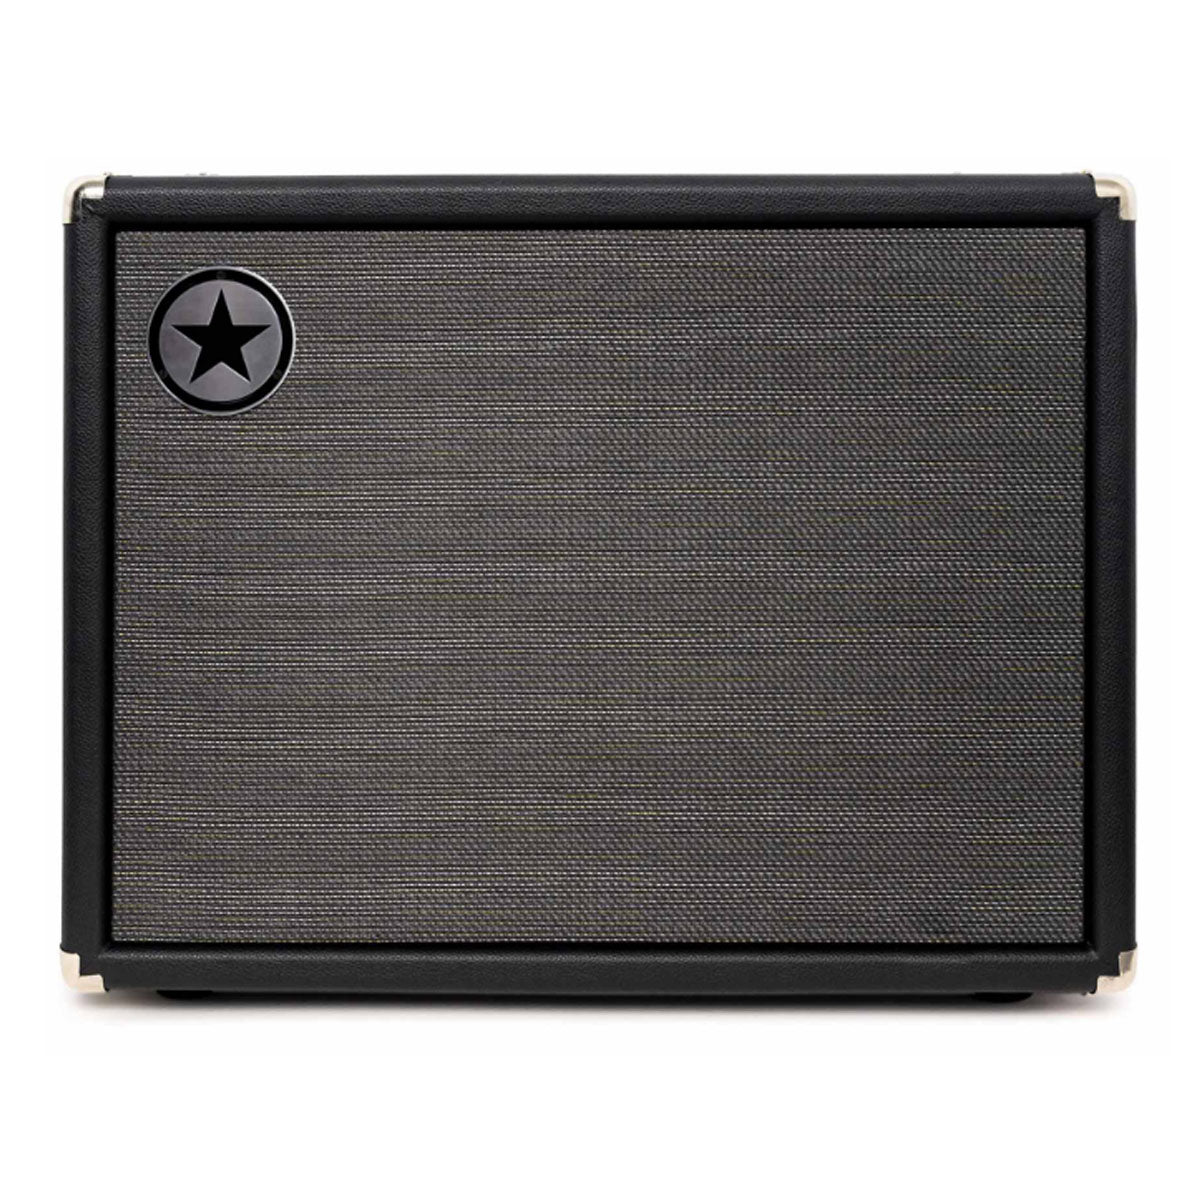 Blackstar Unity Elite 210 Bass Guitar Cabinet 2x10inch Speaker Cab